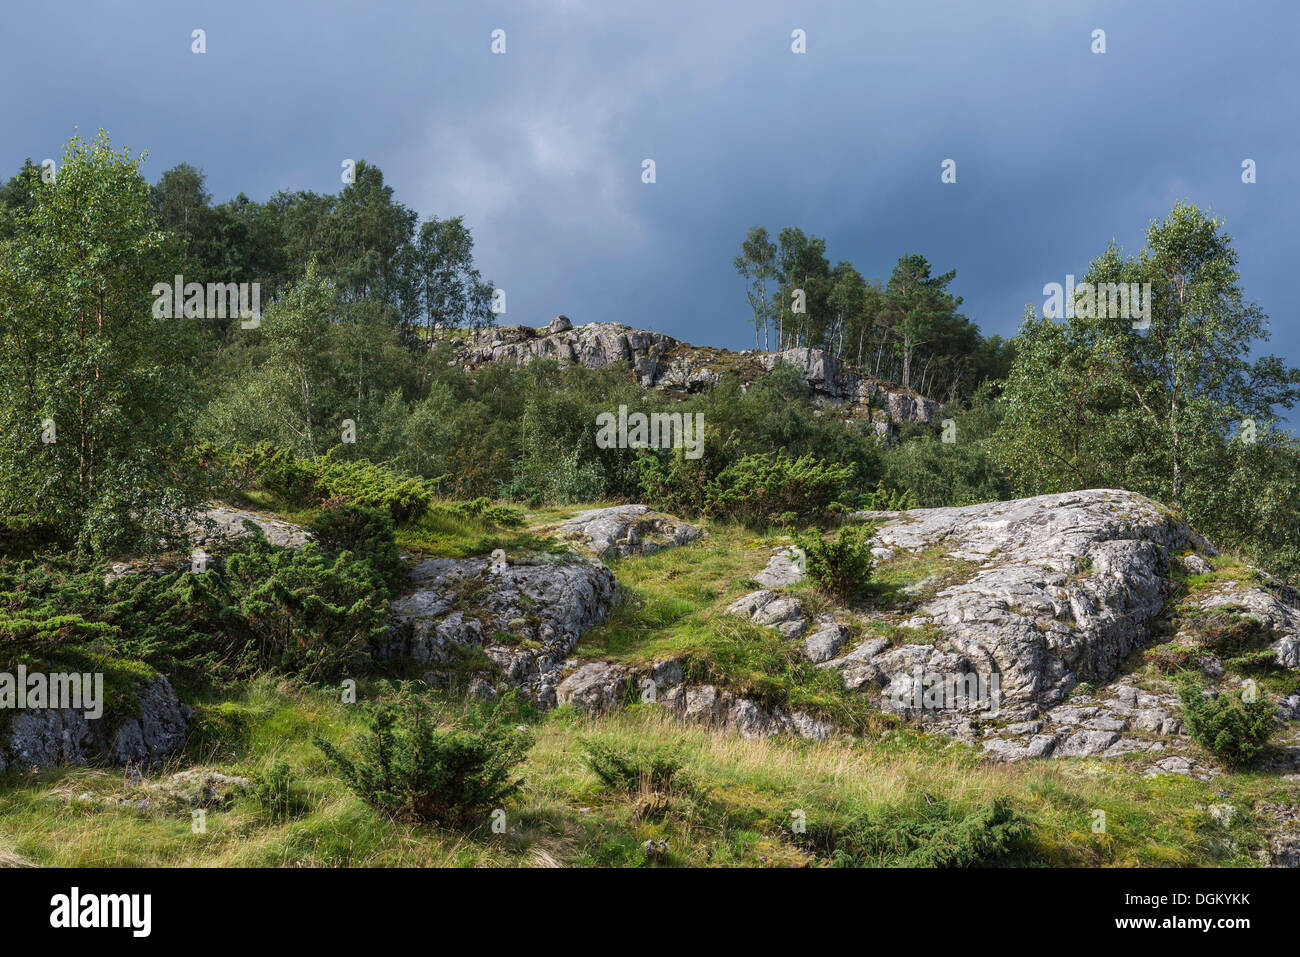 Hilly landscape with rocks, juniper bushes and birch trees, Högsfjord, Südnorwegen, bei Stavanger, Rogaland, Western Norway Stock Photo